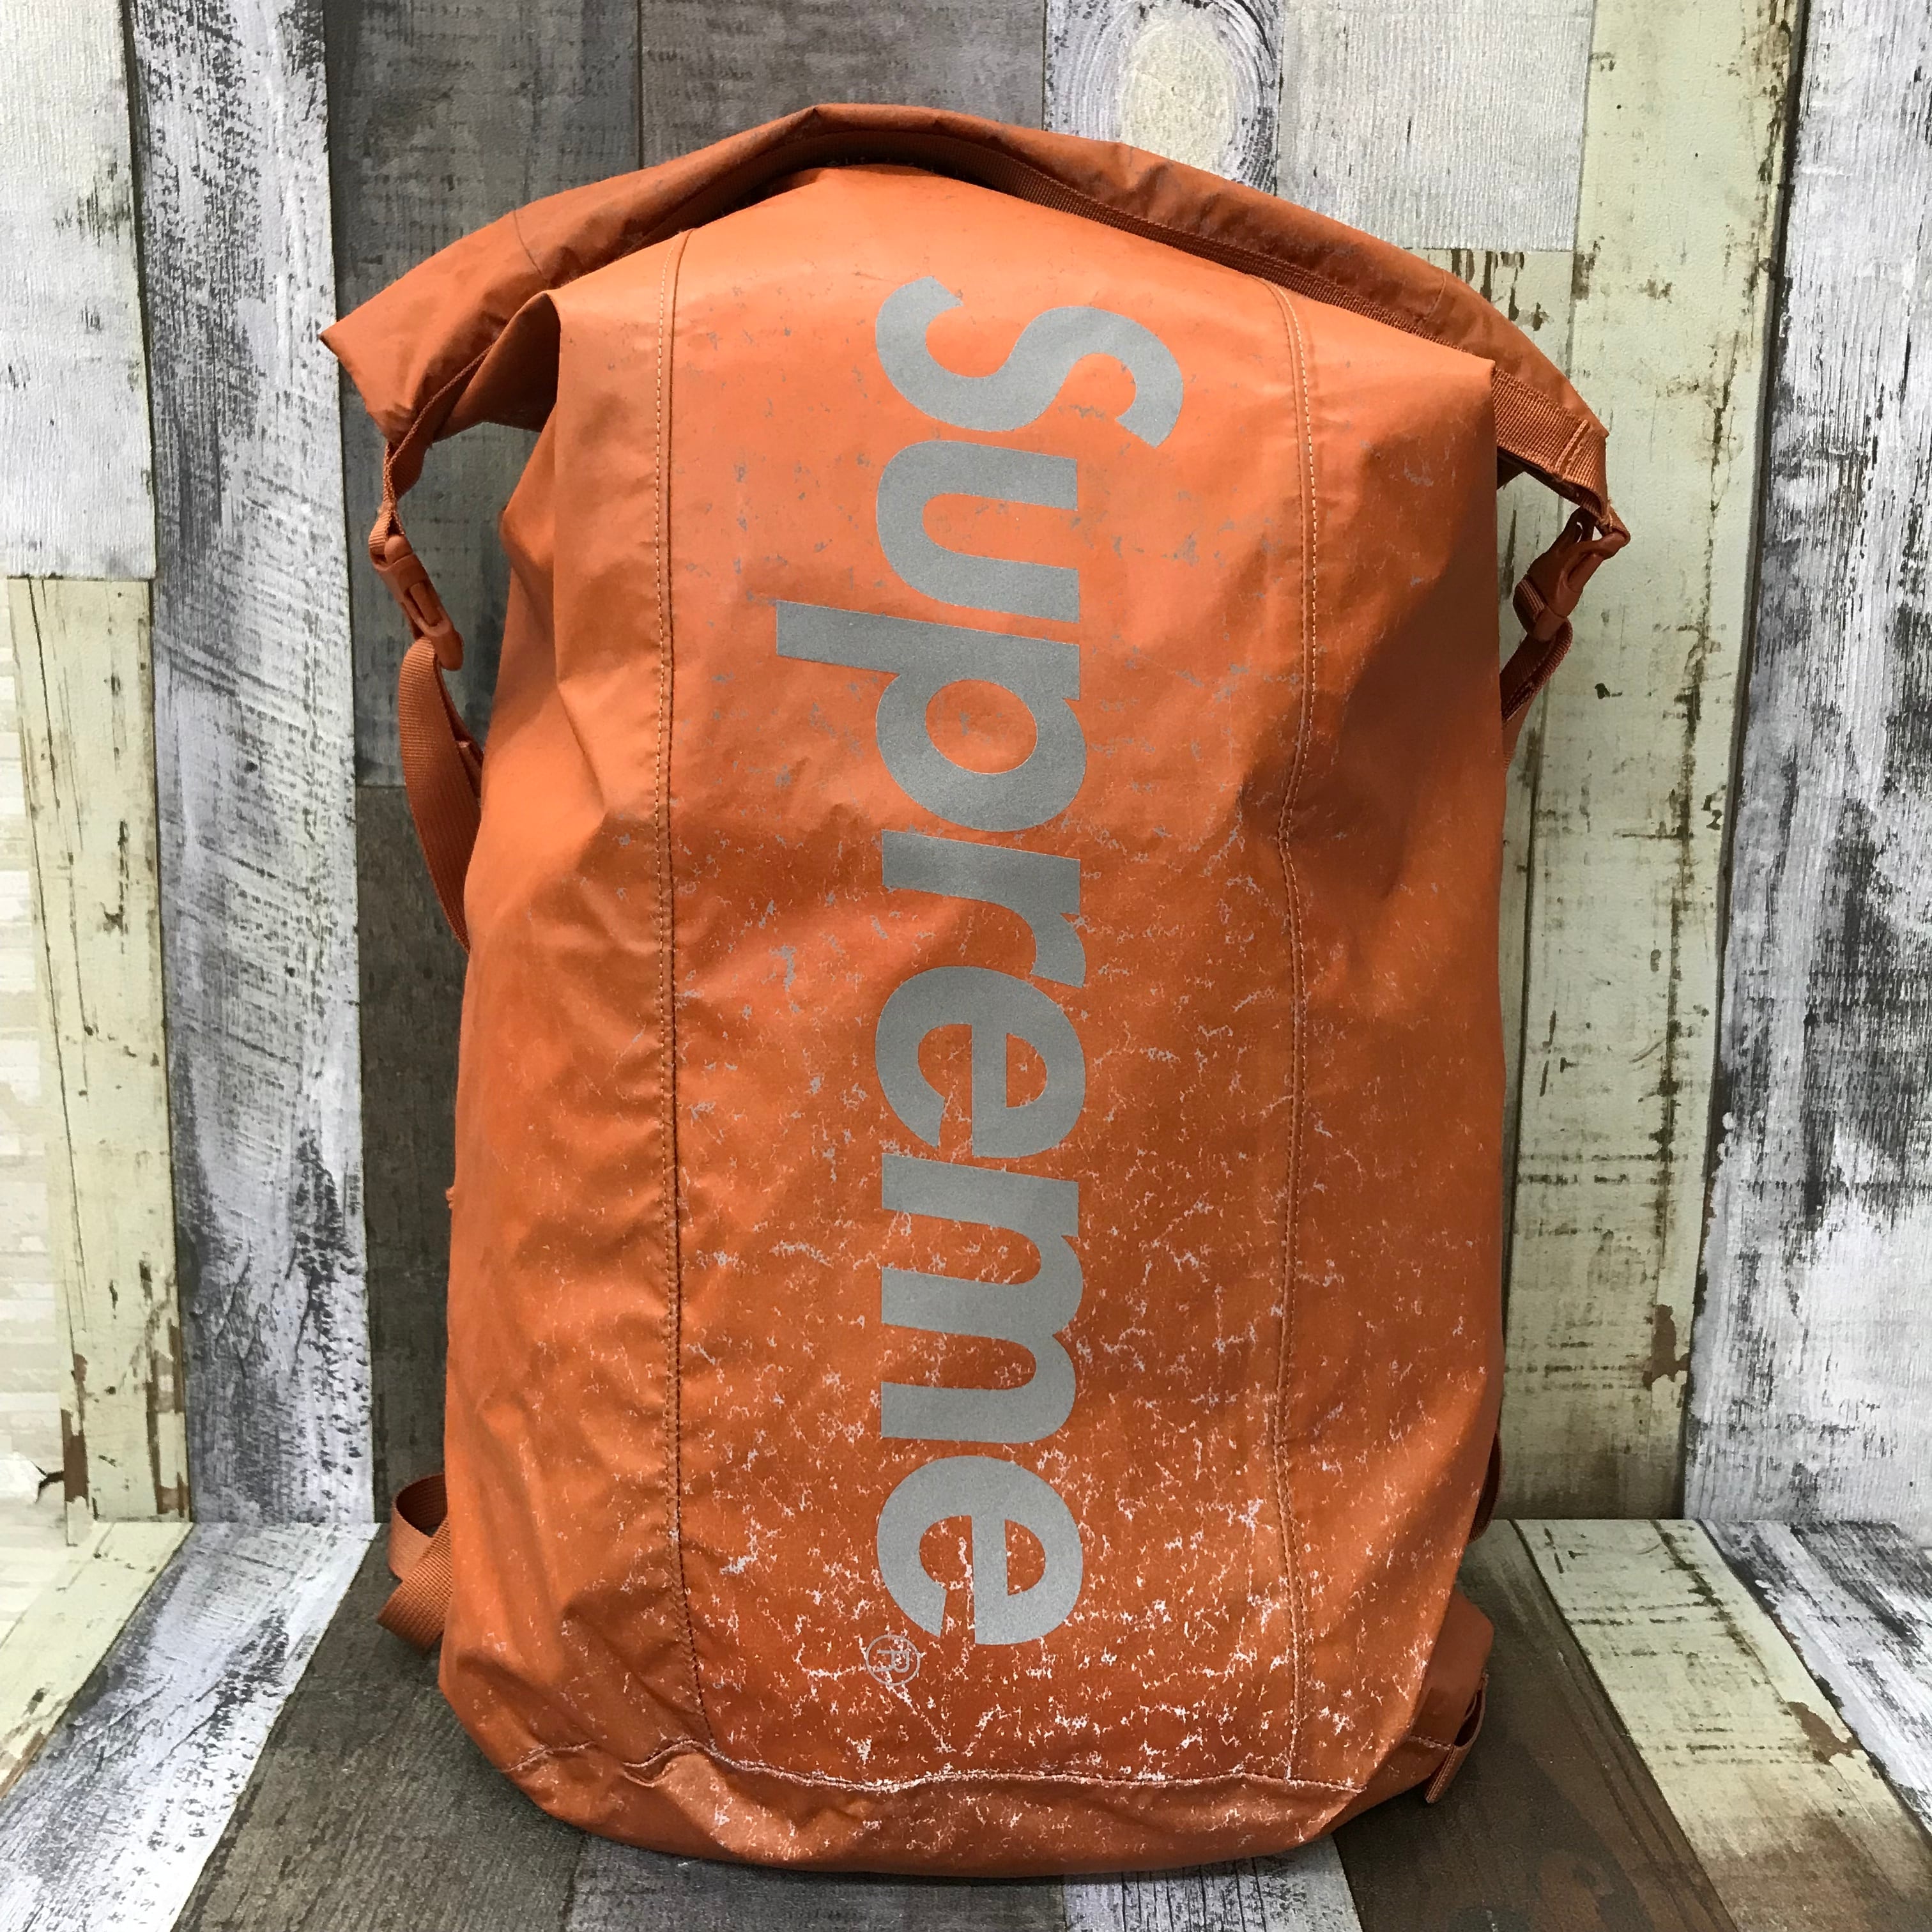 supreme waterproof   backpack  バックパック